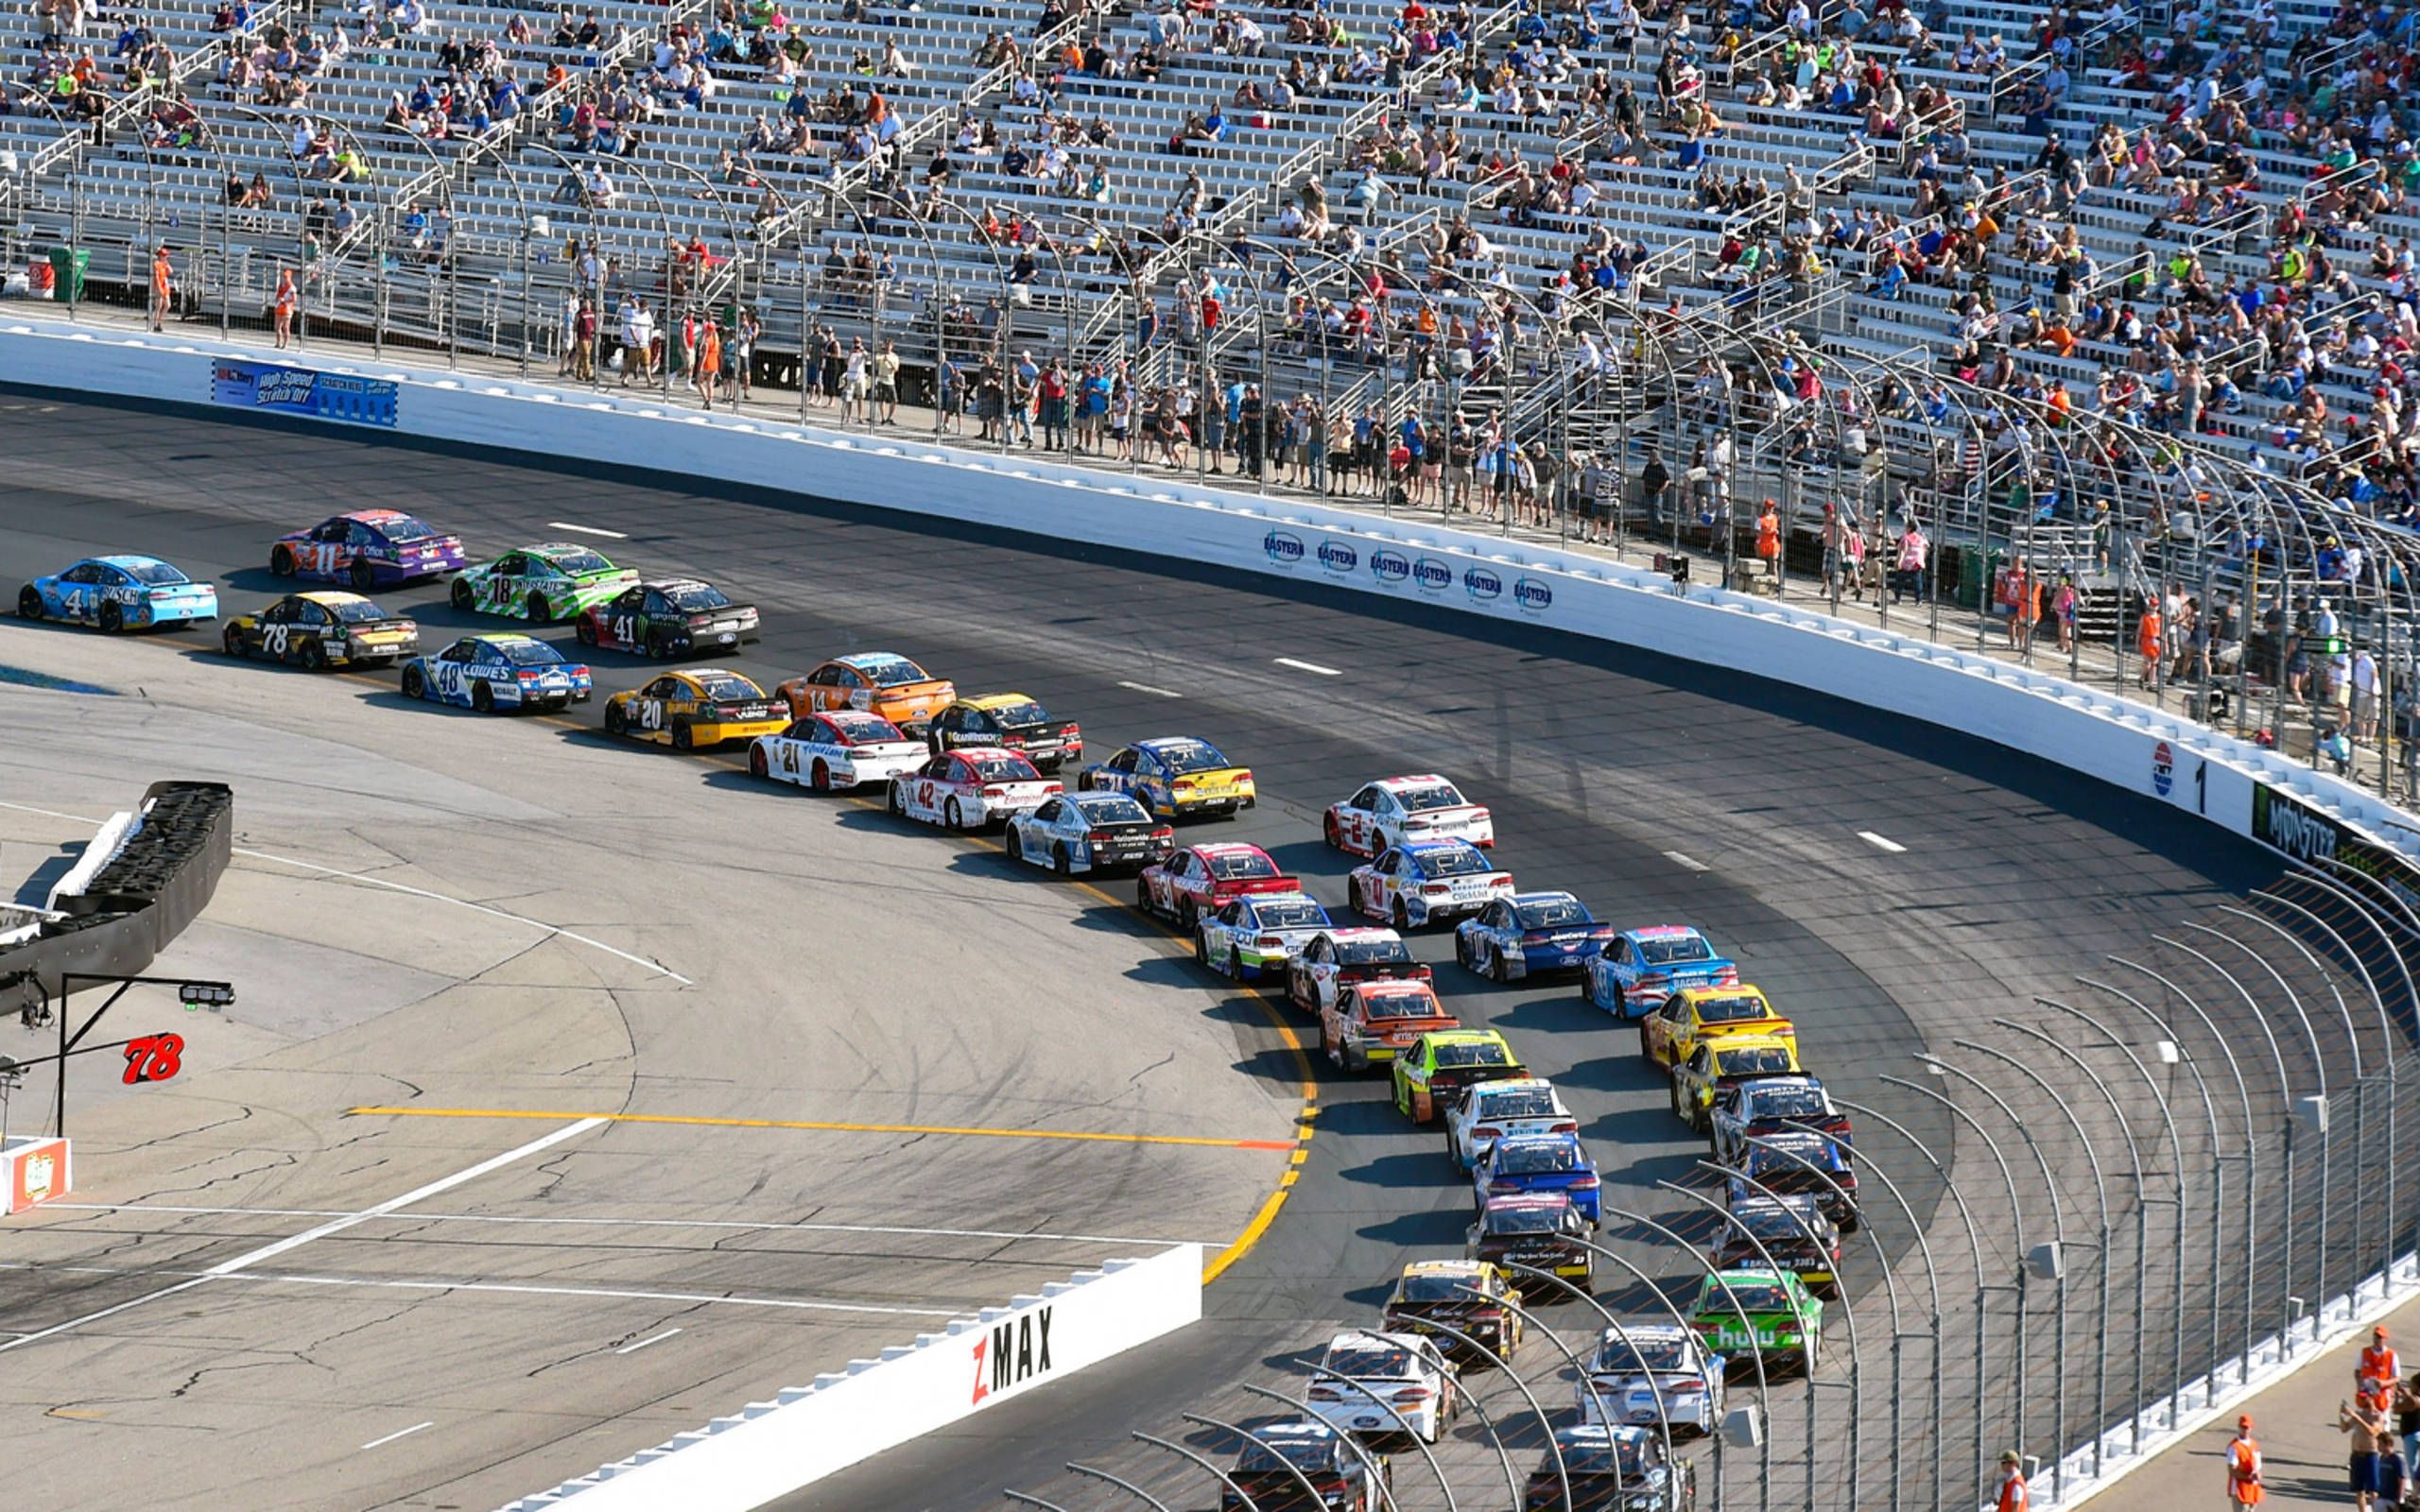 Racing insiders optimistic about new NASCAR president Brent Dewar